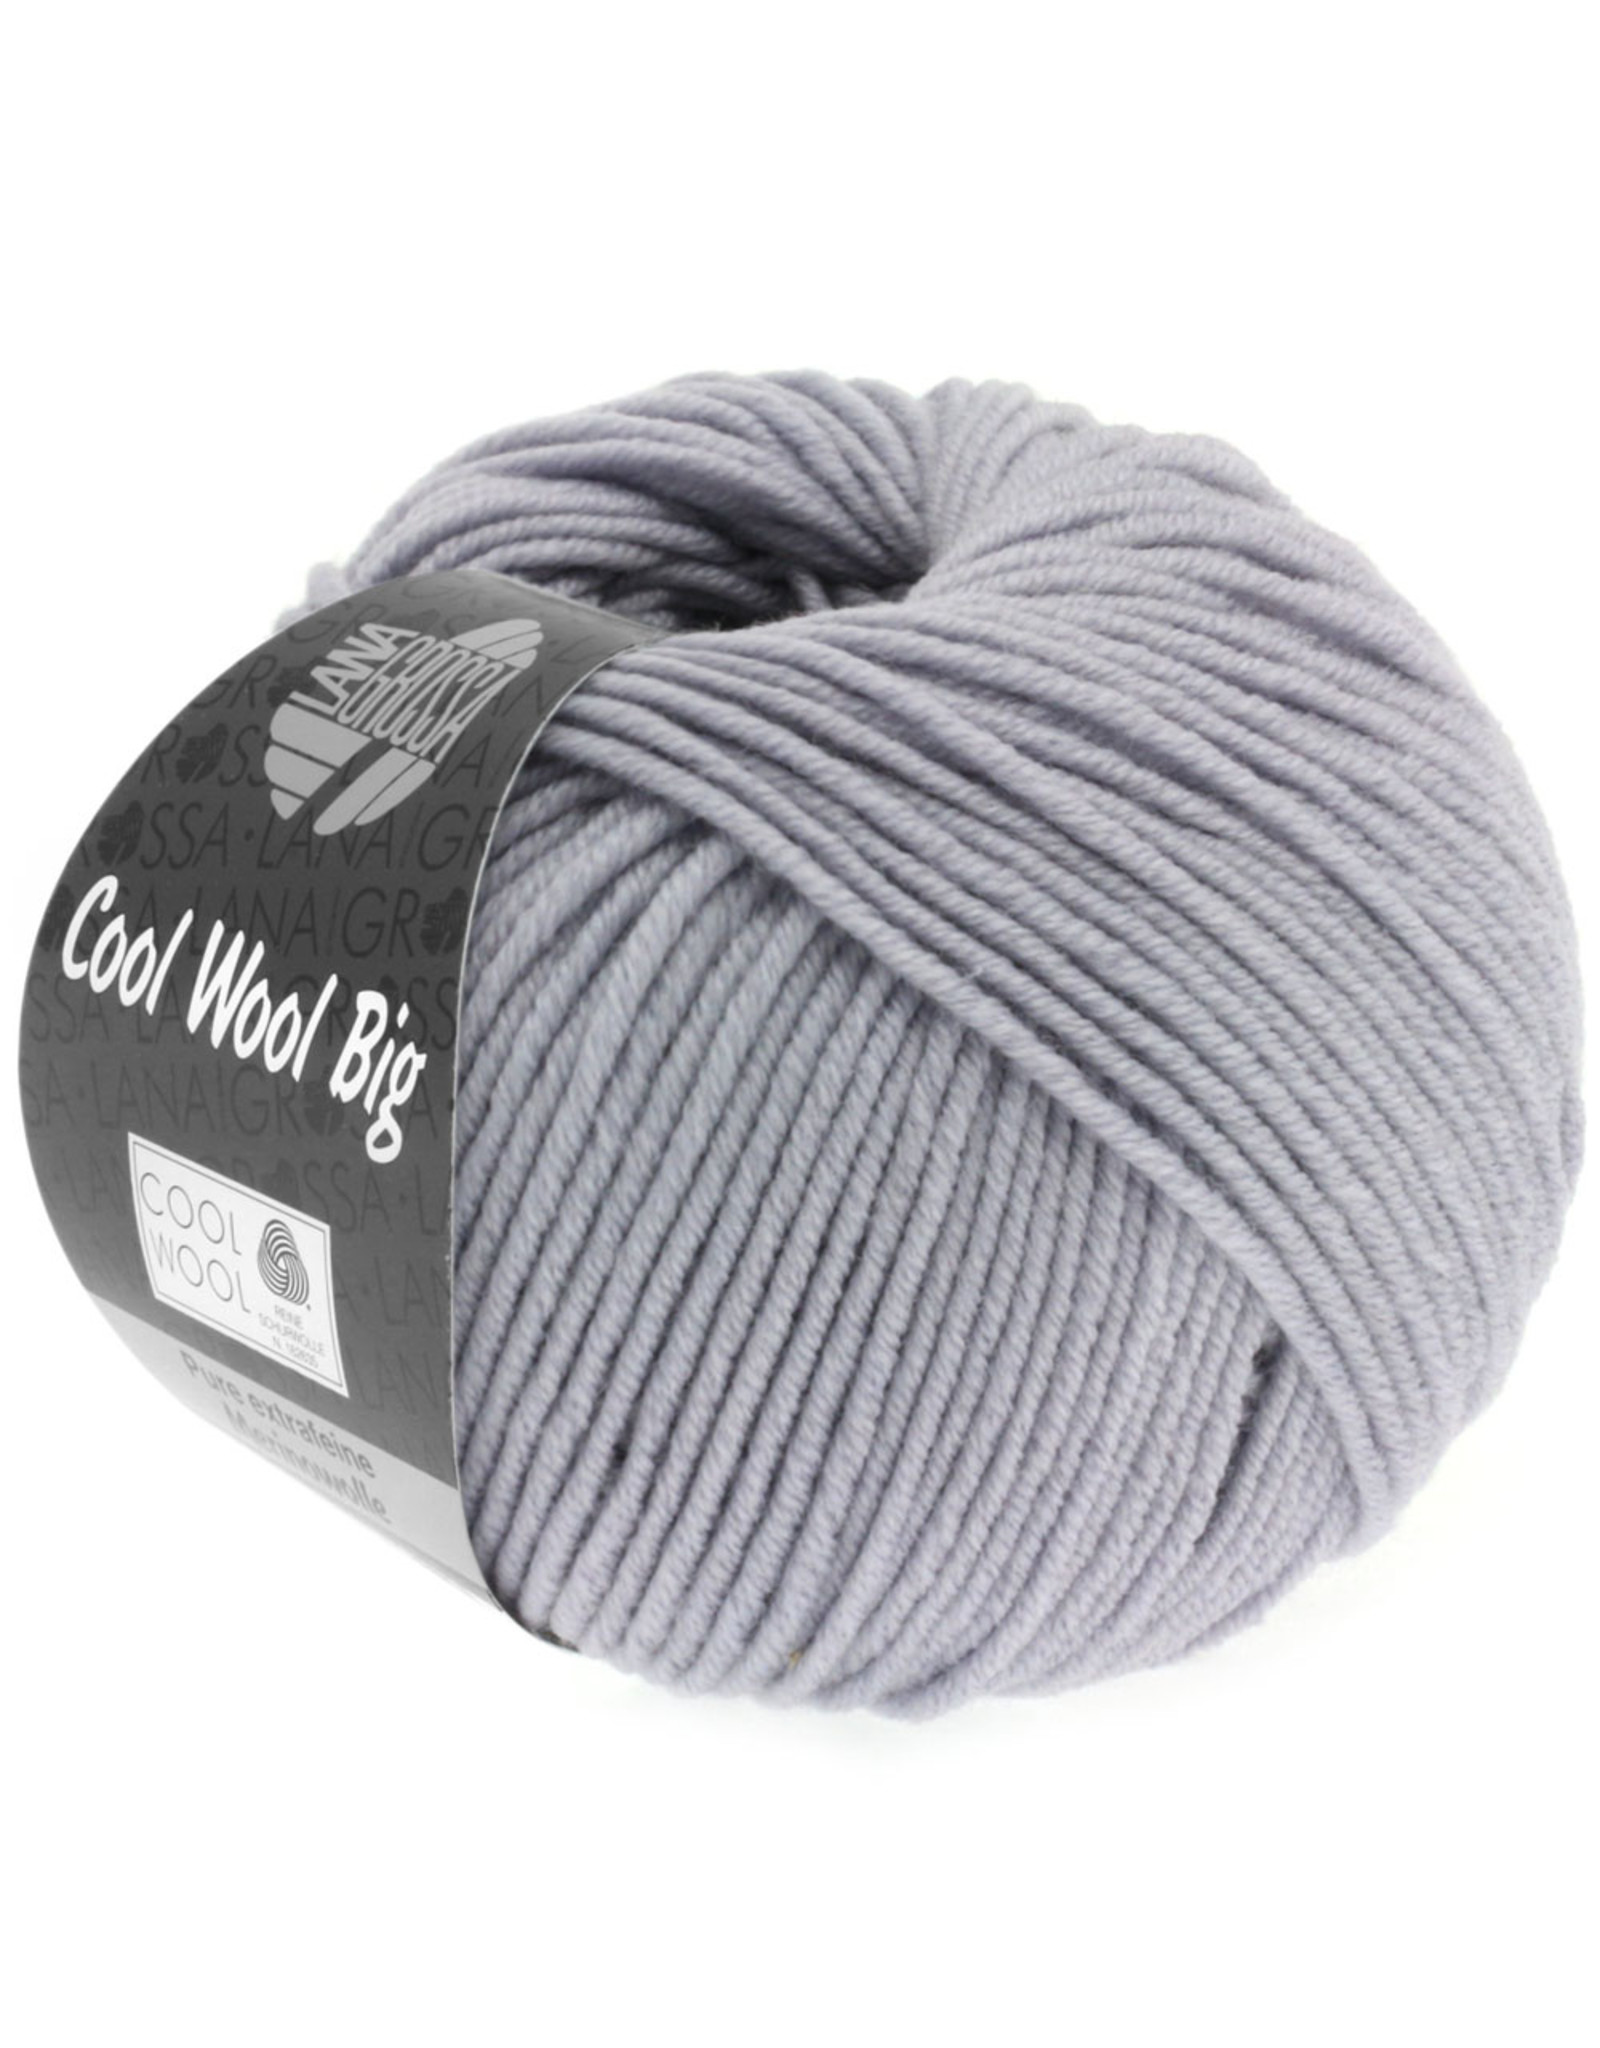 Lana Grossa Lana Grossa Cool Wool Big 948